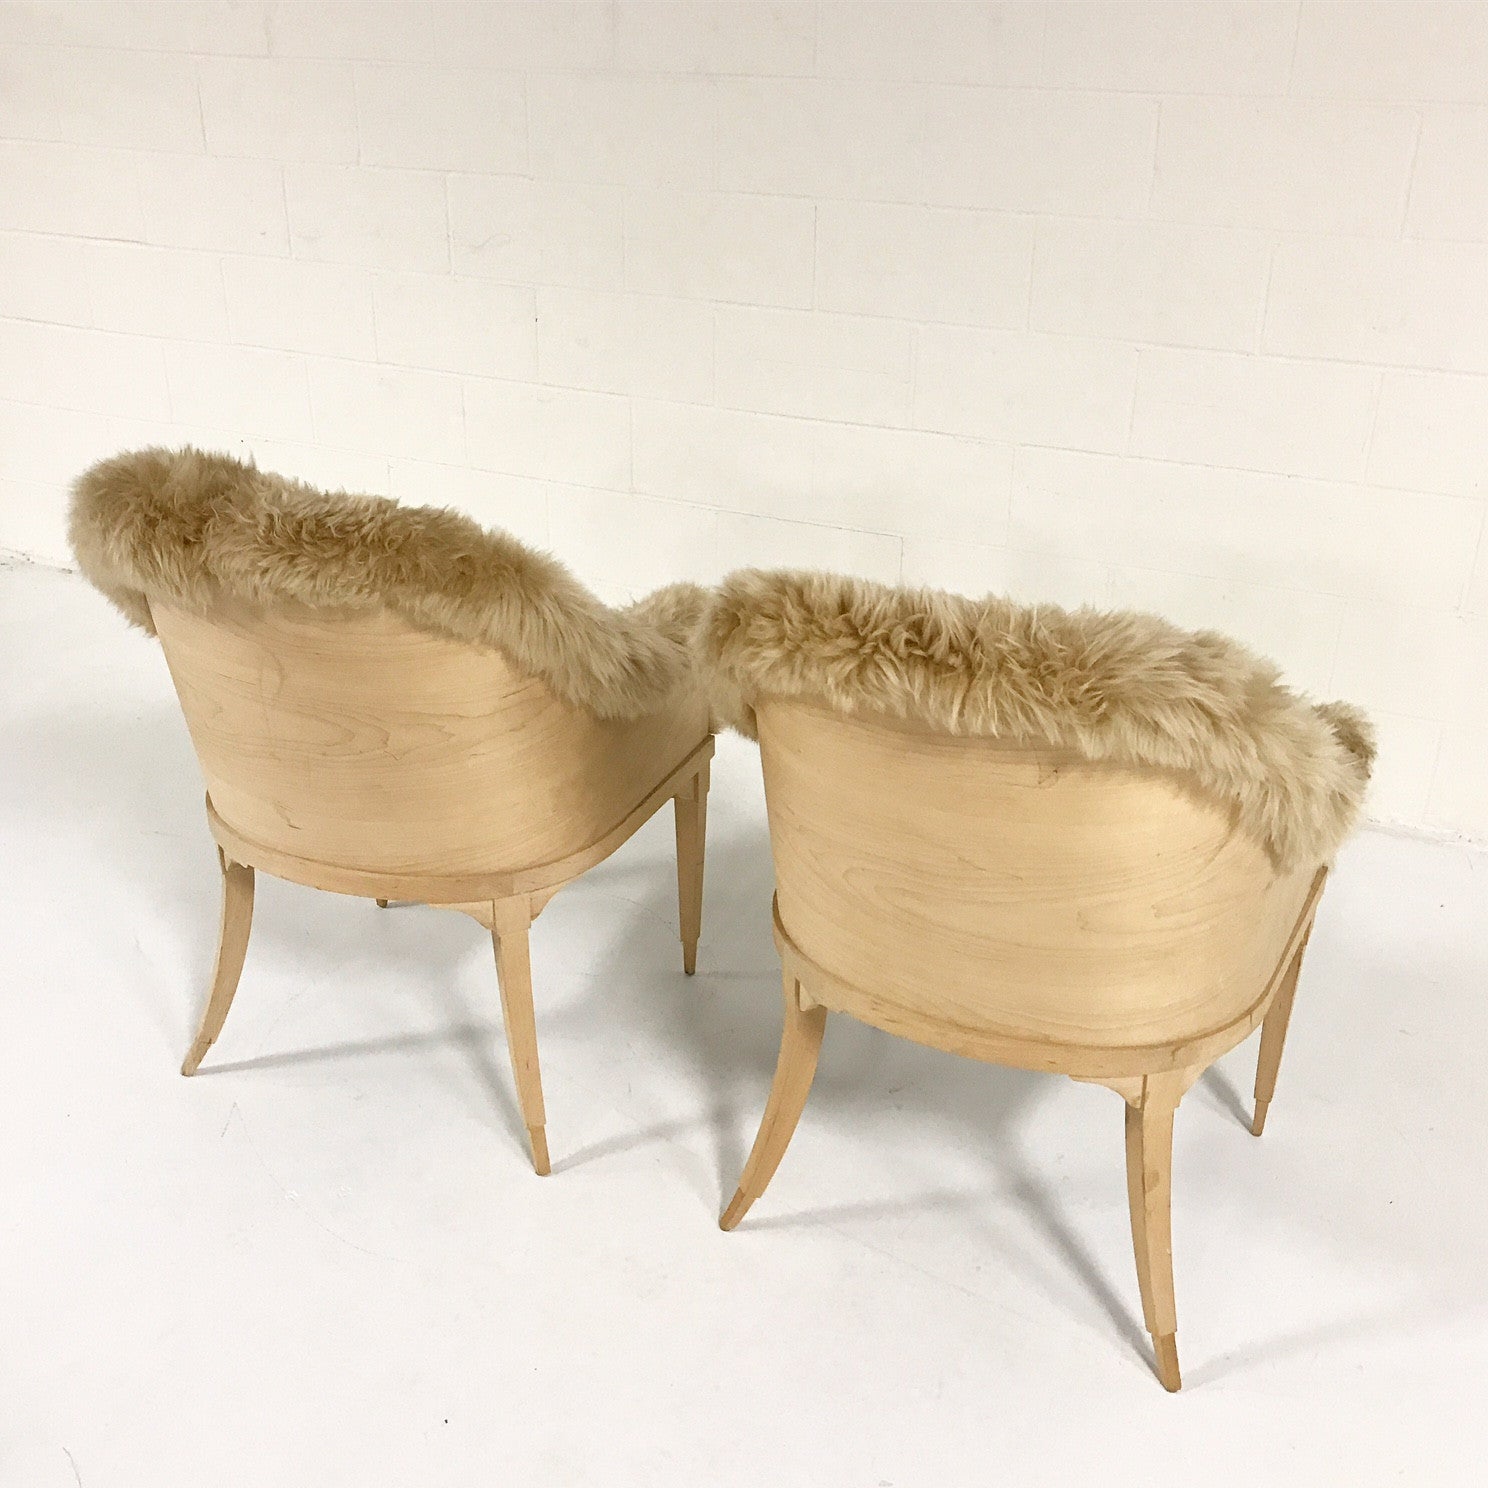 Barrel Chairs in New Zealand Sheepskin, pair - FORSYTH